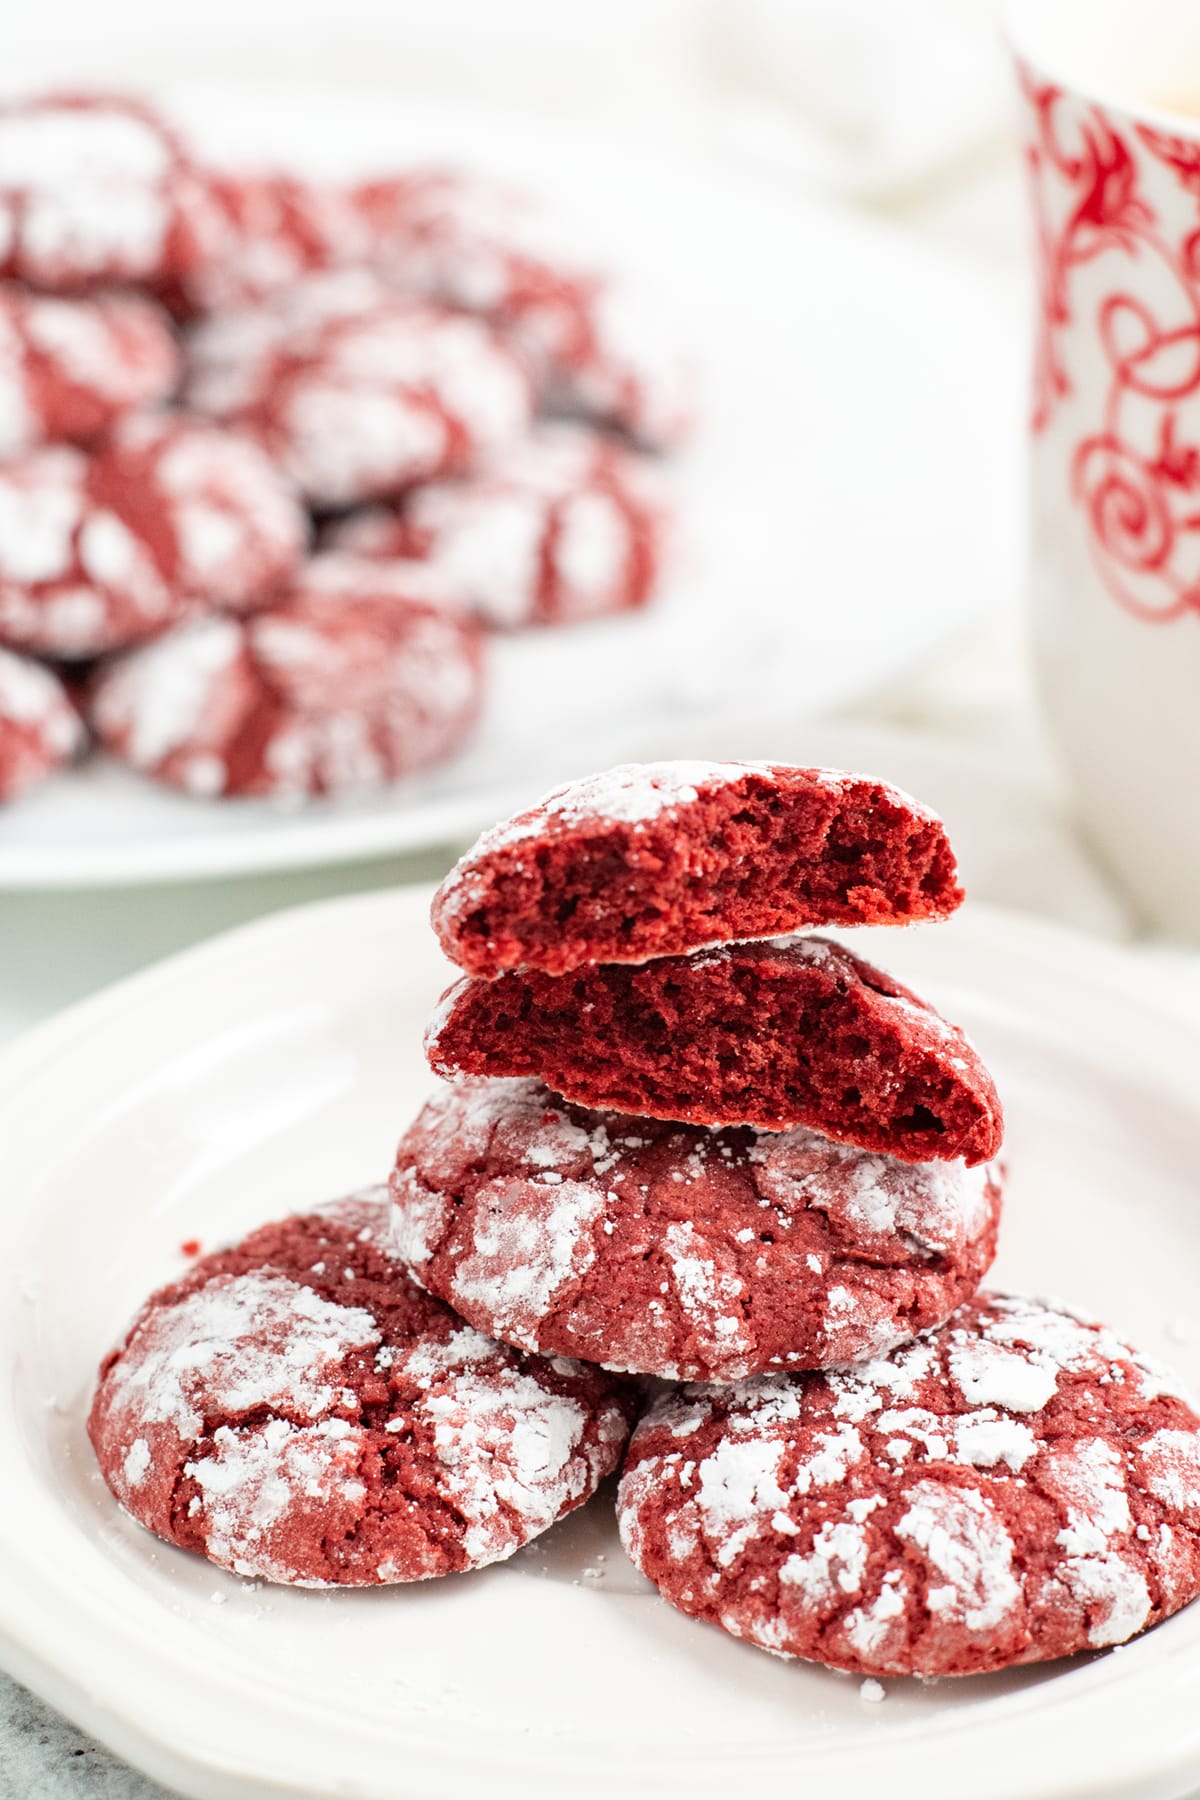 A red velvet crinkle cookies in lovely earthquake cracks coated in powdered sugar.